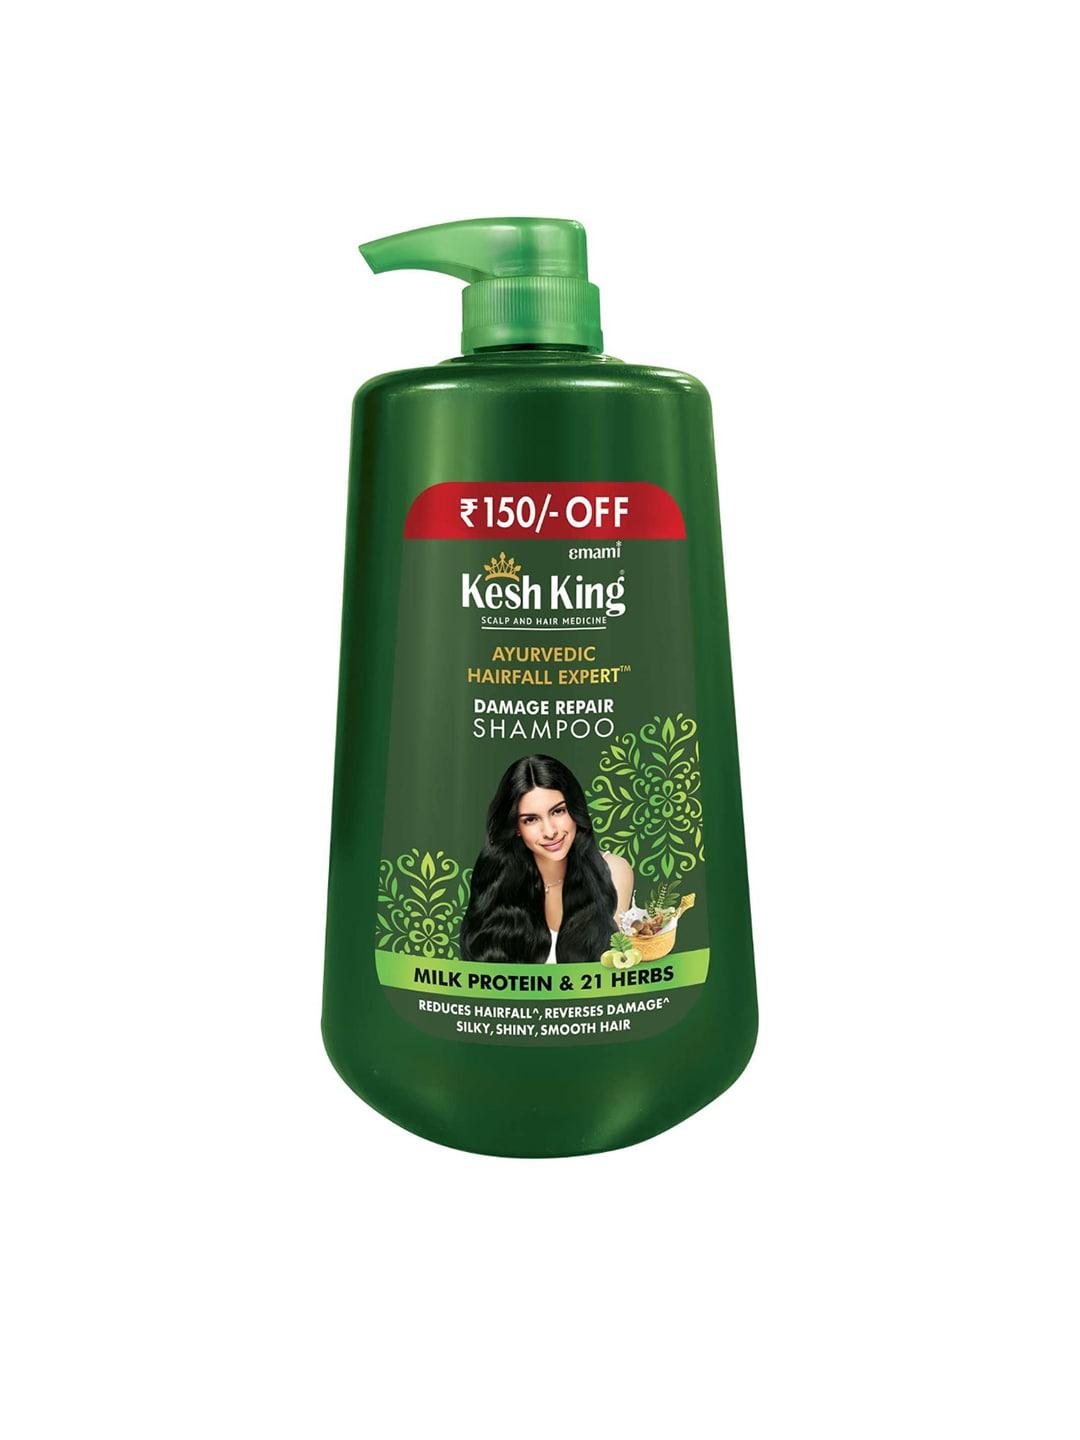 Kesh King Medicine Ayurvedic Hairfall Expert Damage Repair Shampoo with Milk Protein - 1 L